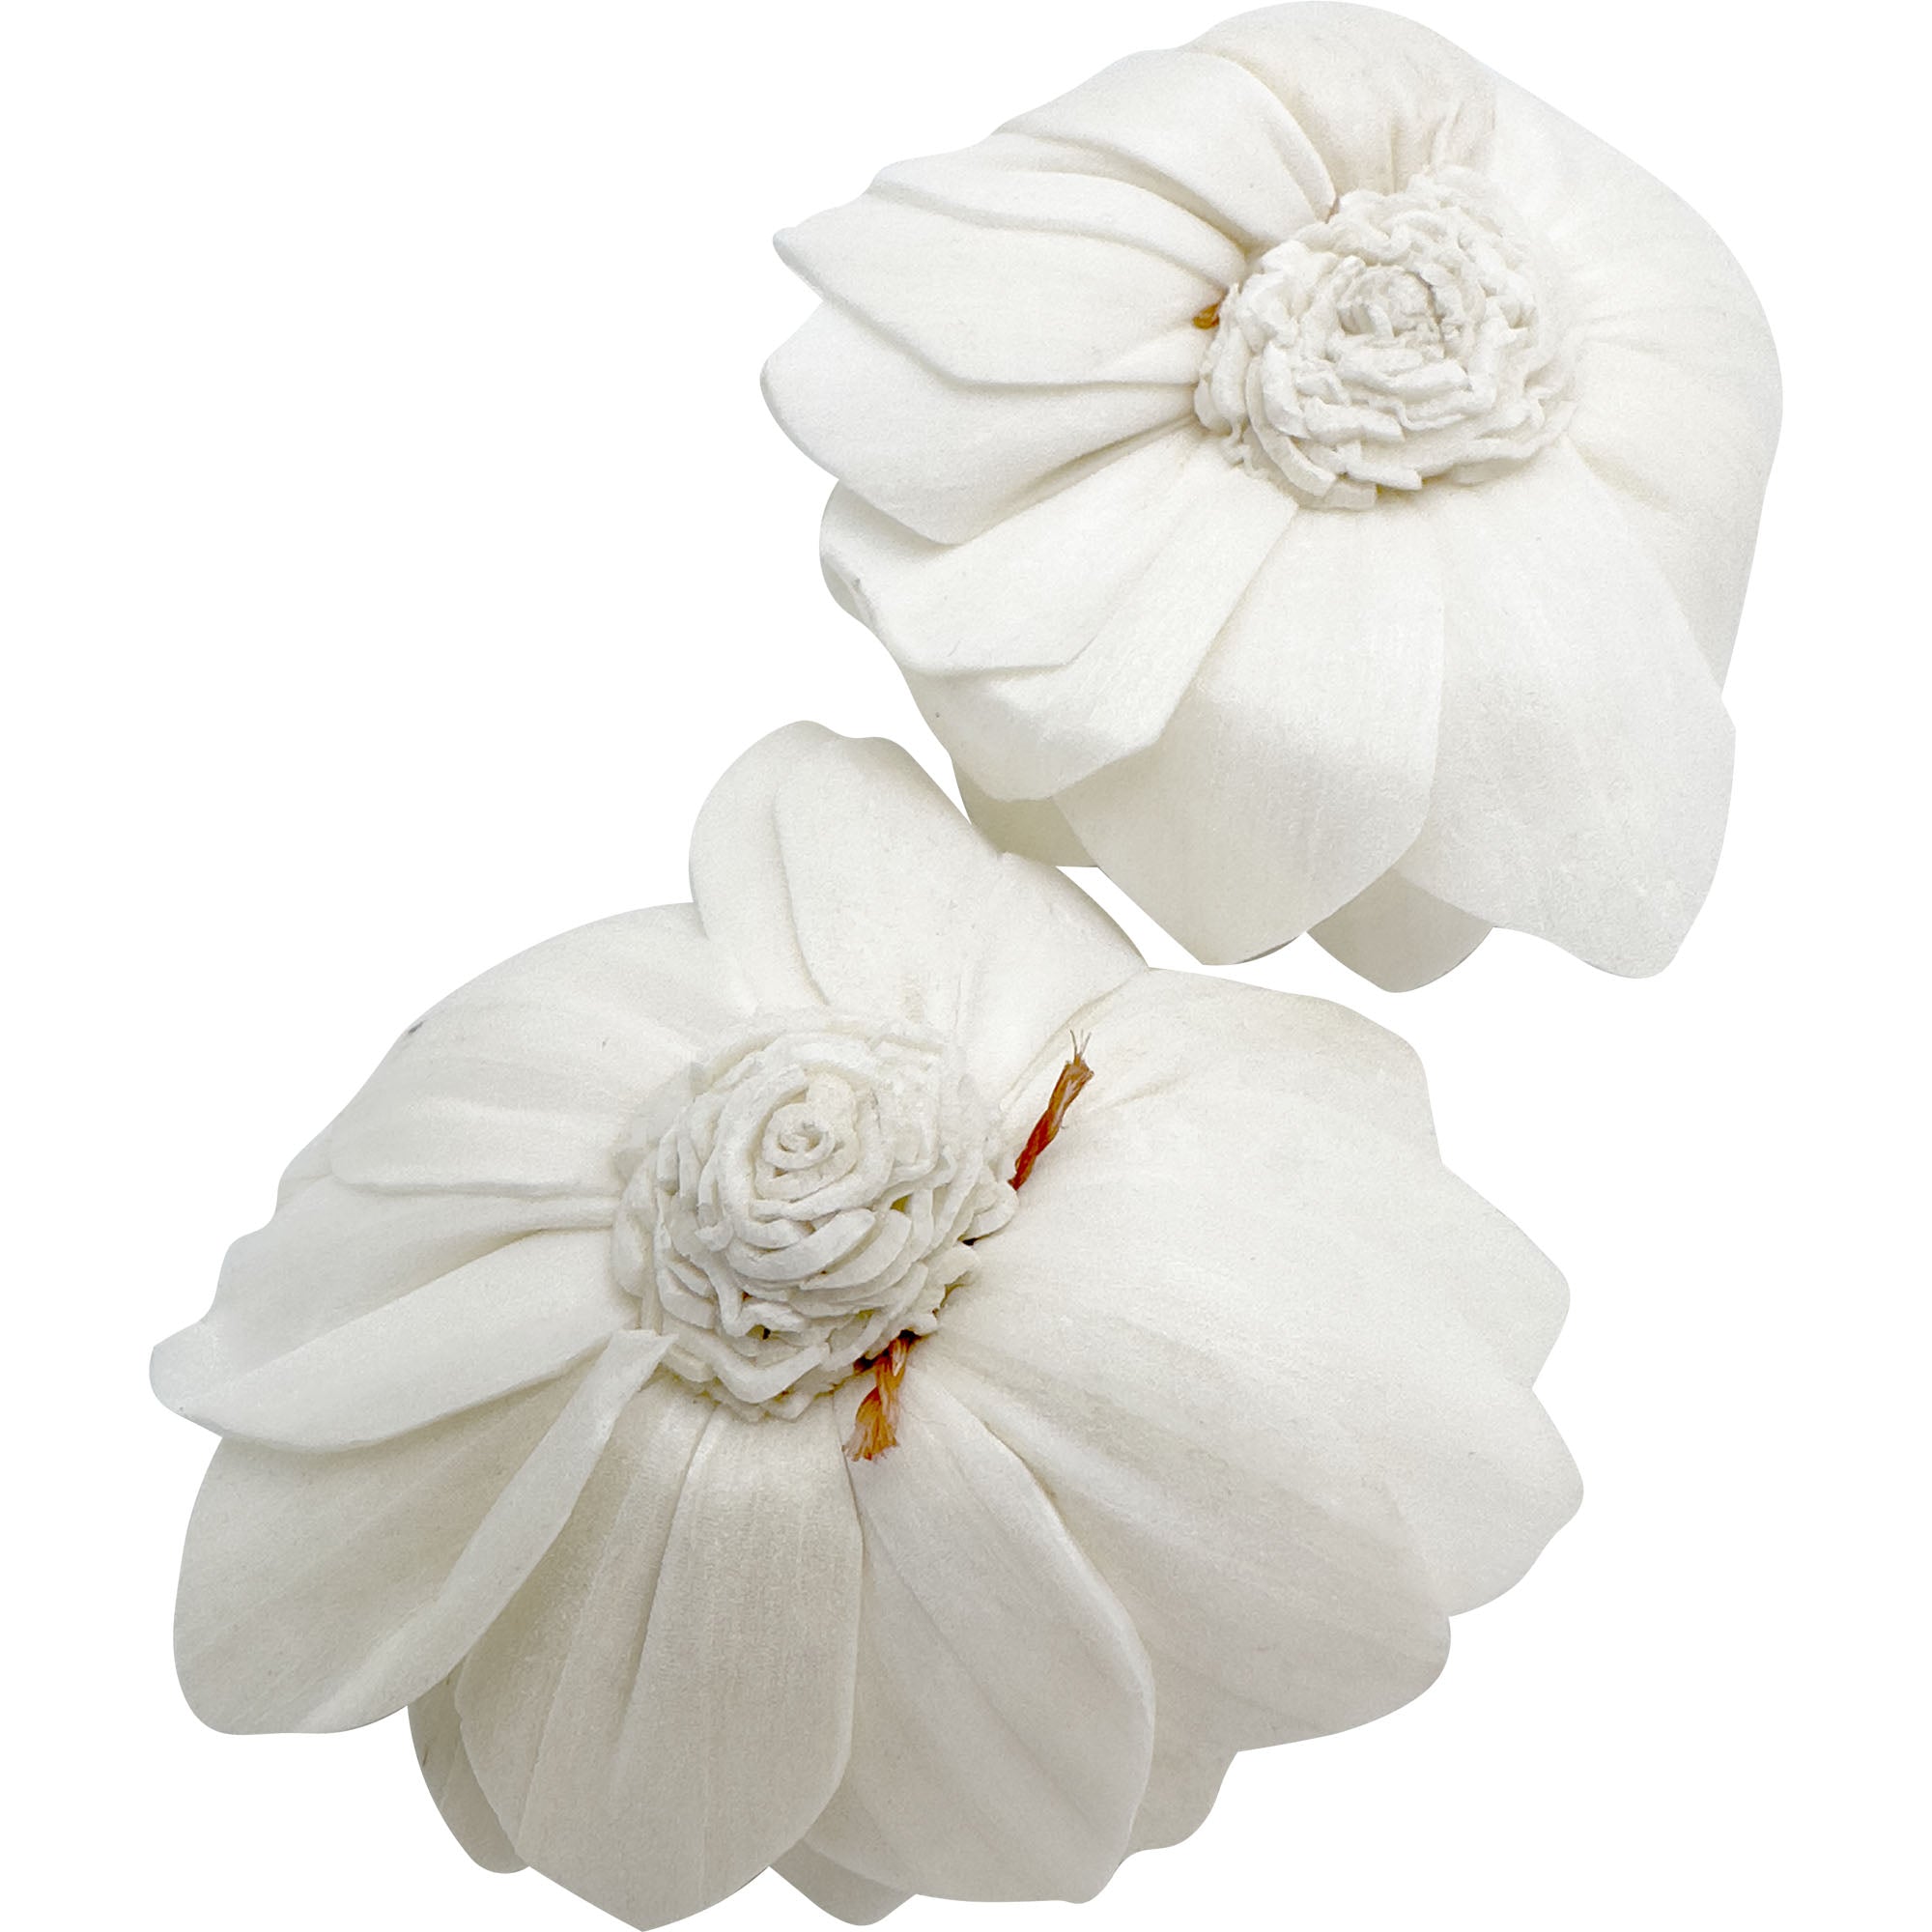 Sola Wood Flowers -Decorative Floral Foam Blocks, Size: 8